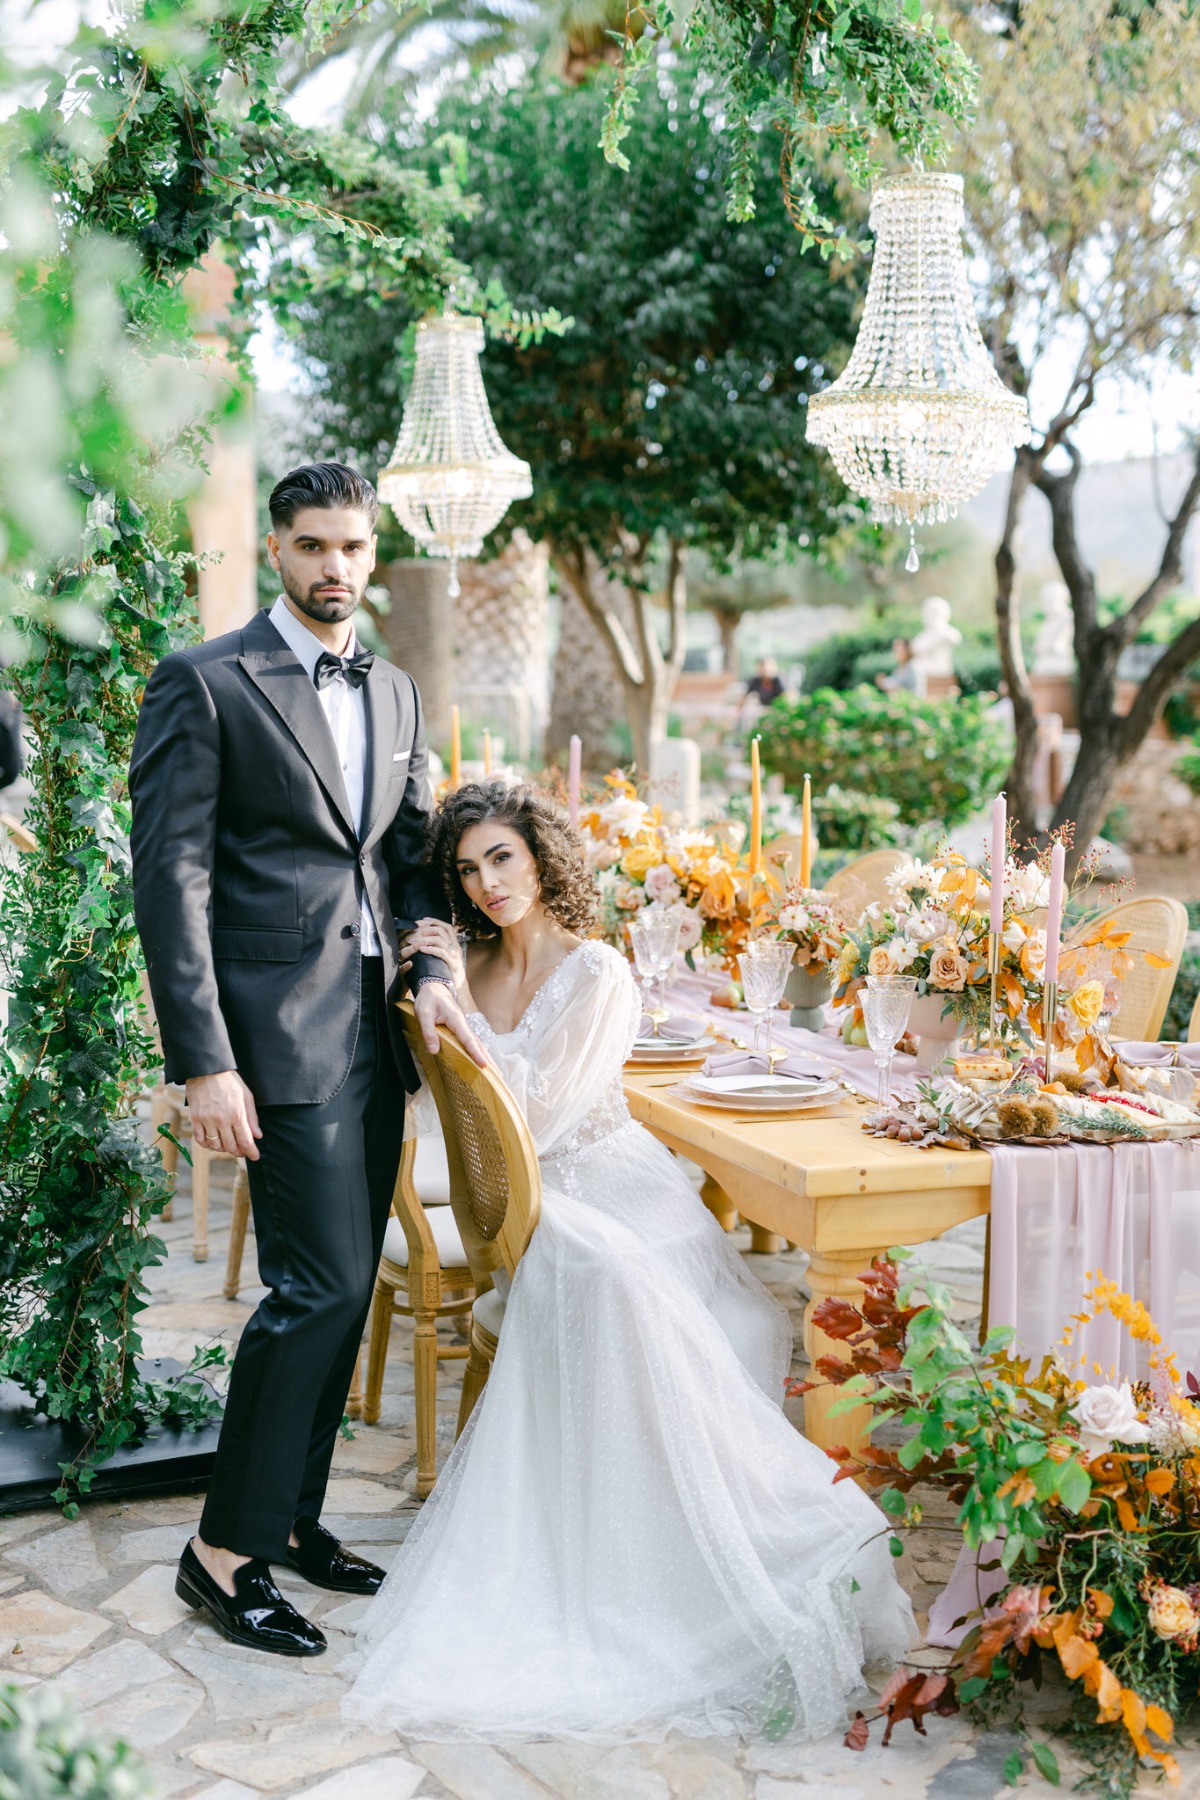 Greek bride and groom at luxury outdoor fall wedding 